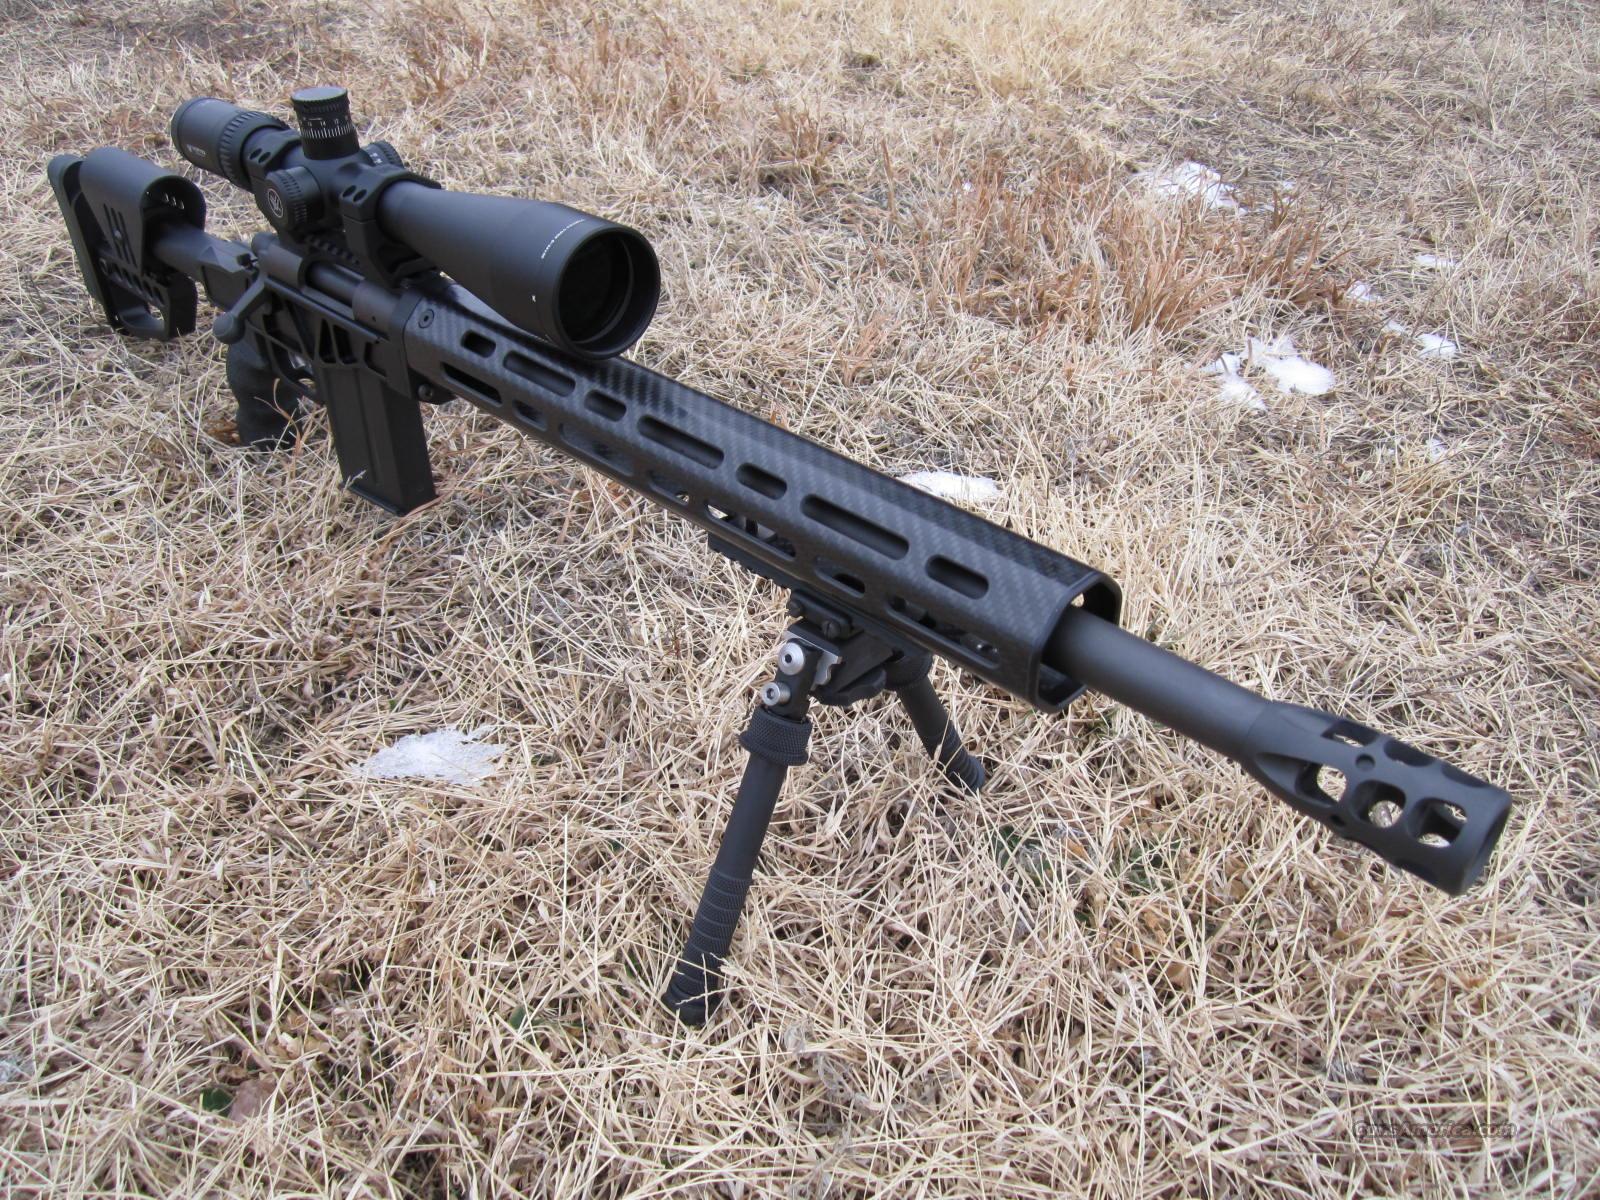 Remington 700 Tactical 308 Review